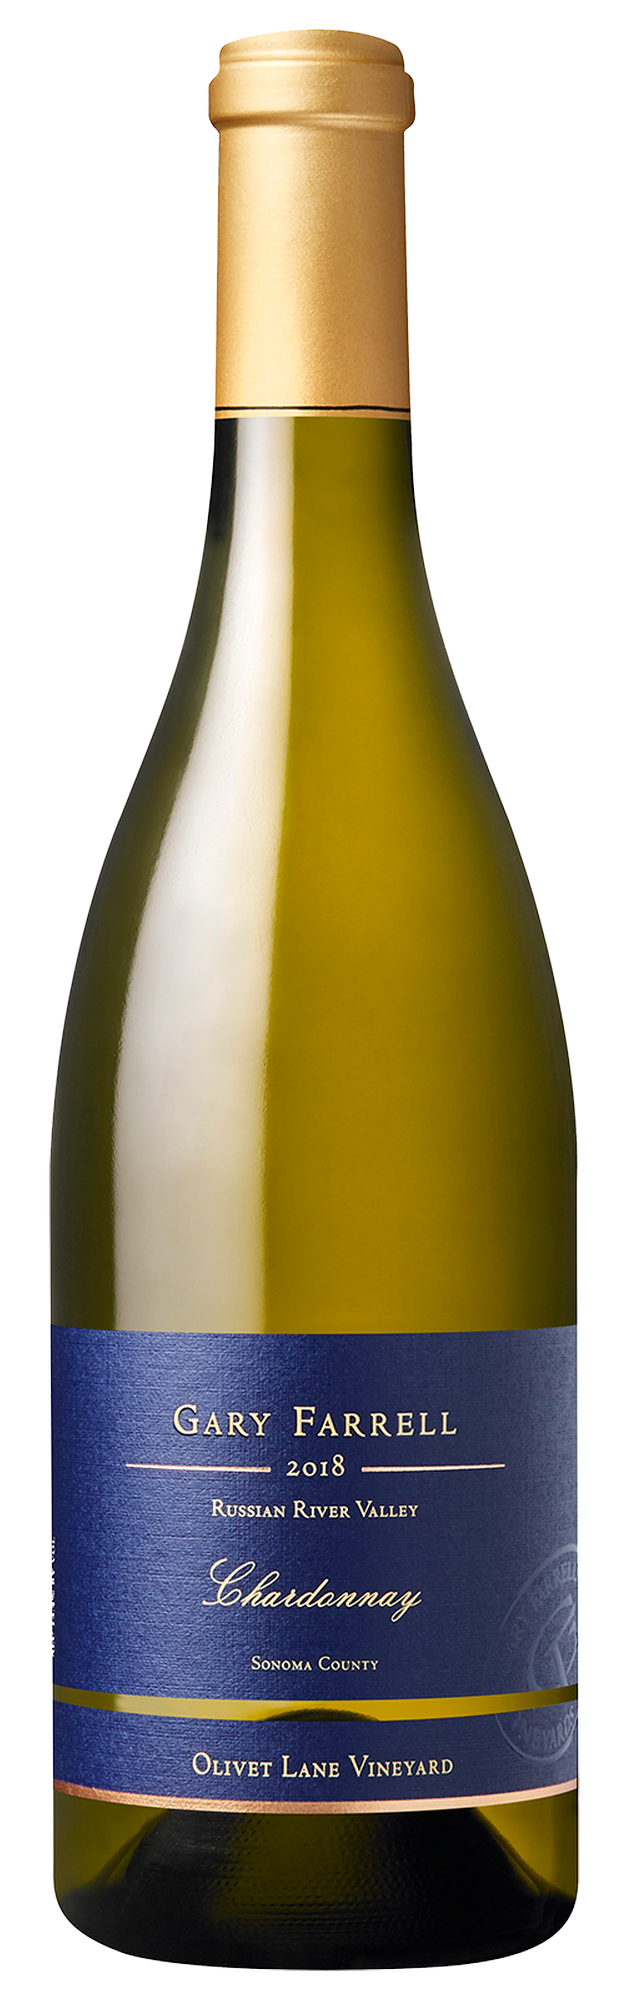 2018 Olivet Lane Vineyard Chardonnay 1.5L